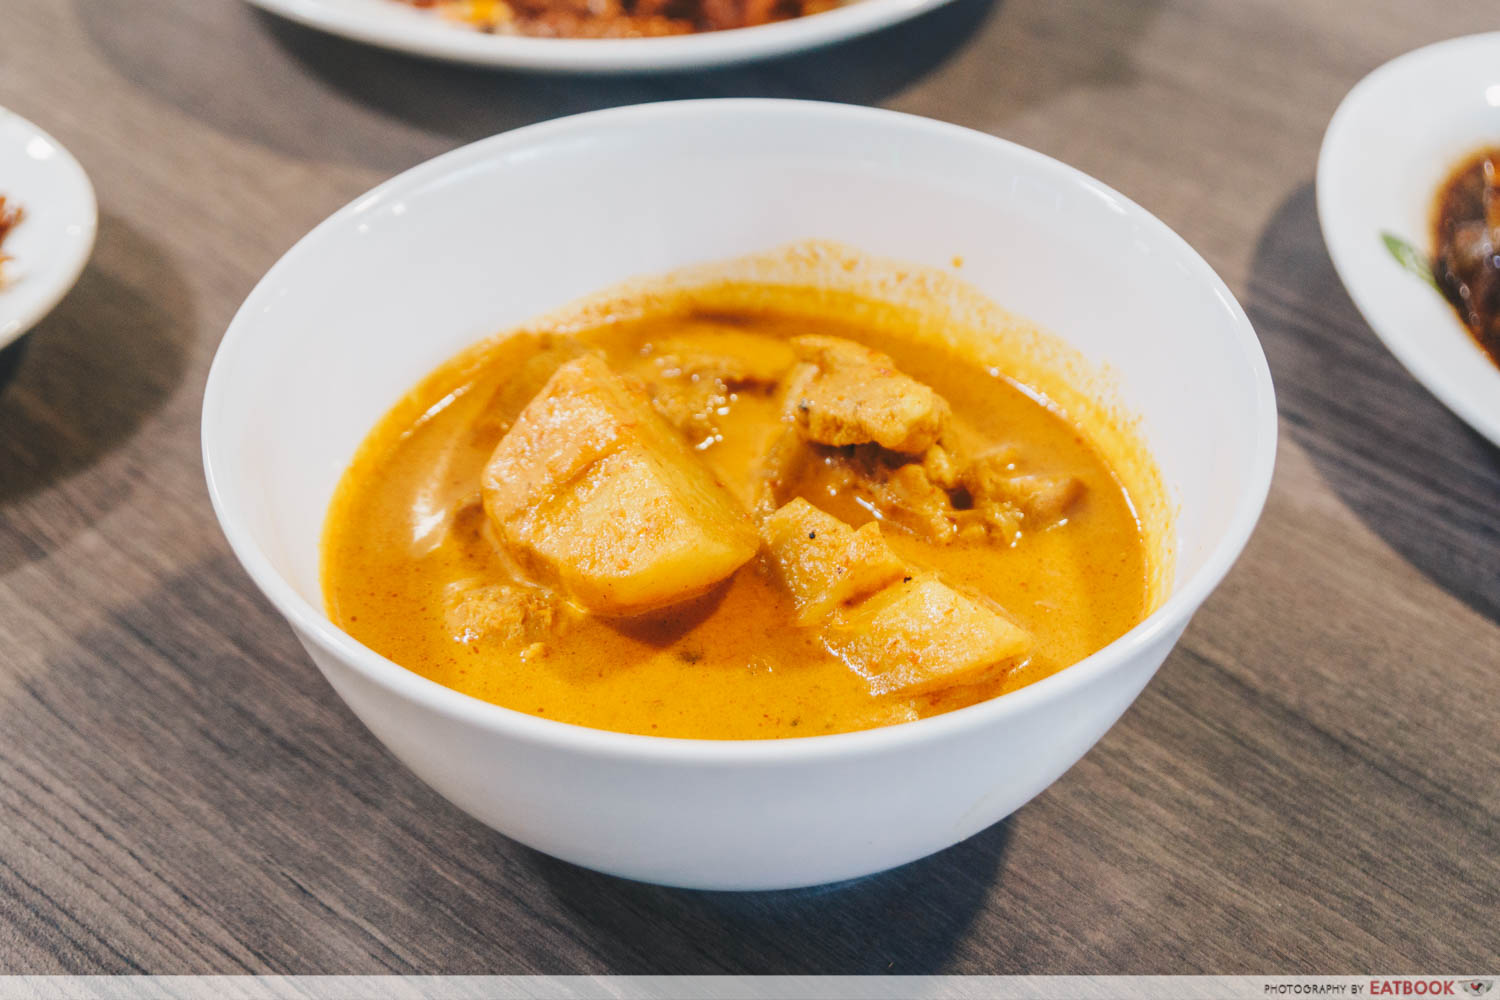 Emmanuel Peranakan Cuisine - Curry chicken intro shot